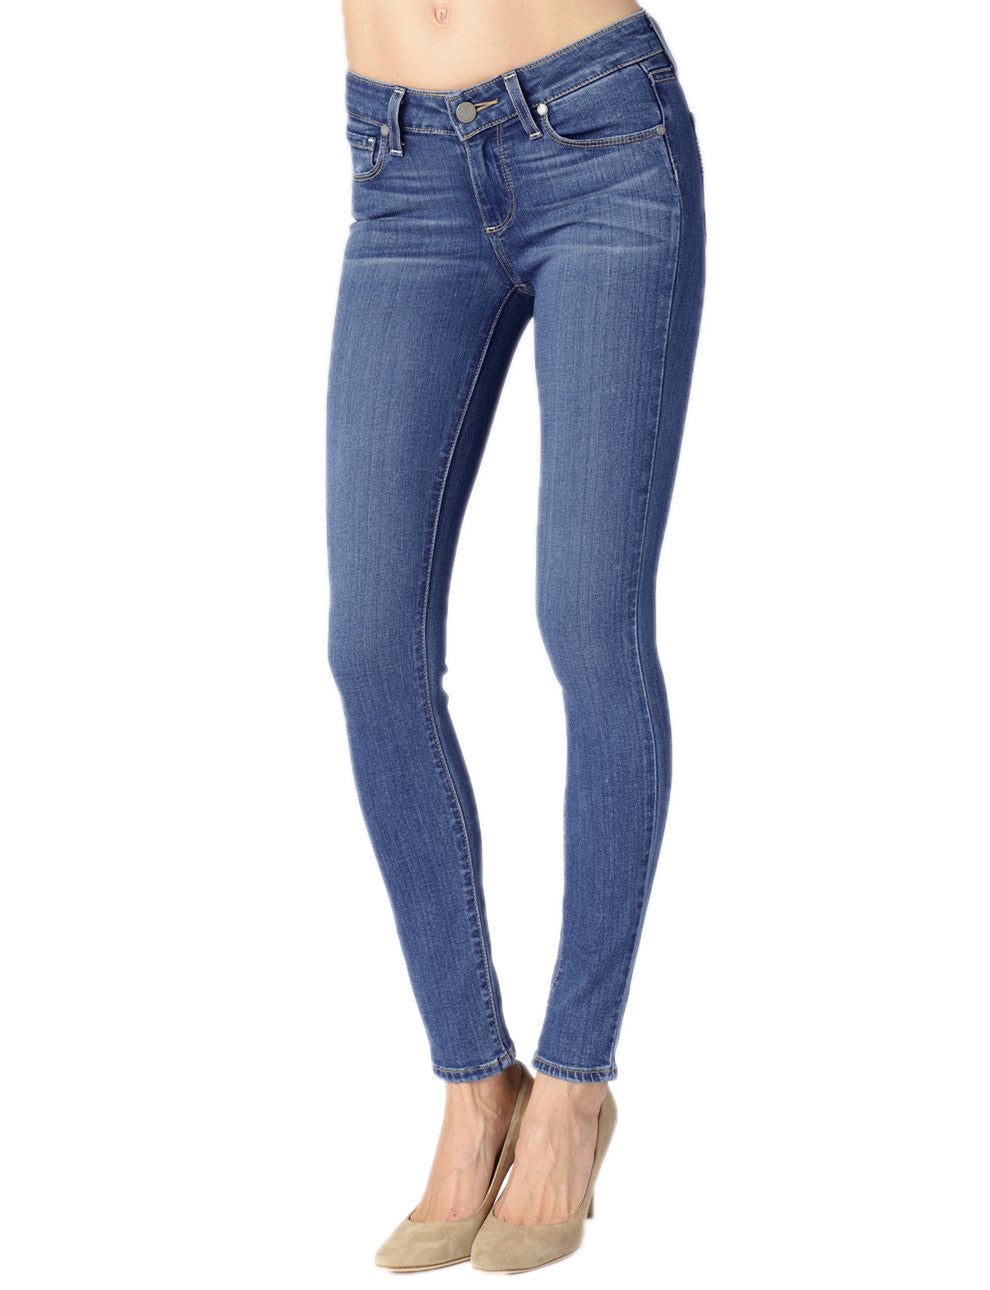 ultra skinny jeans